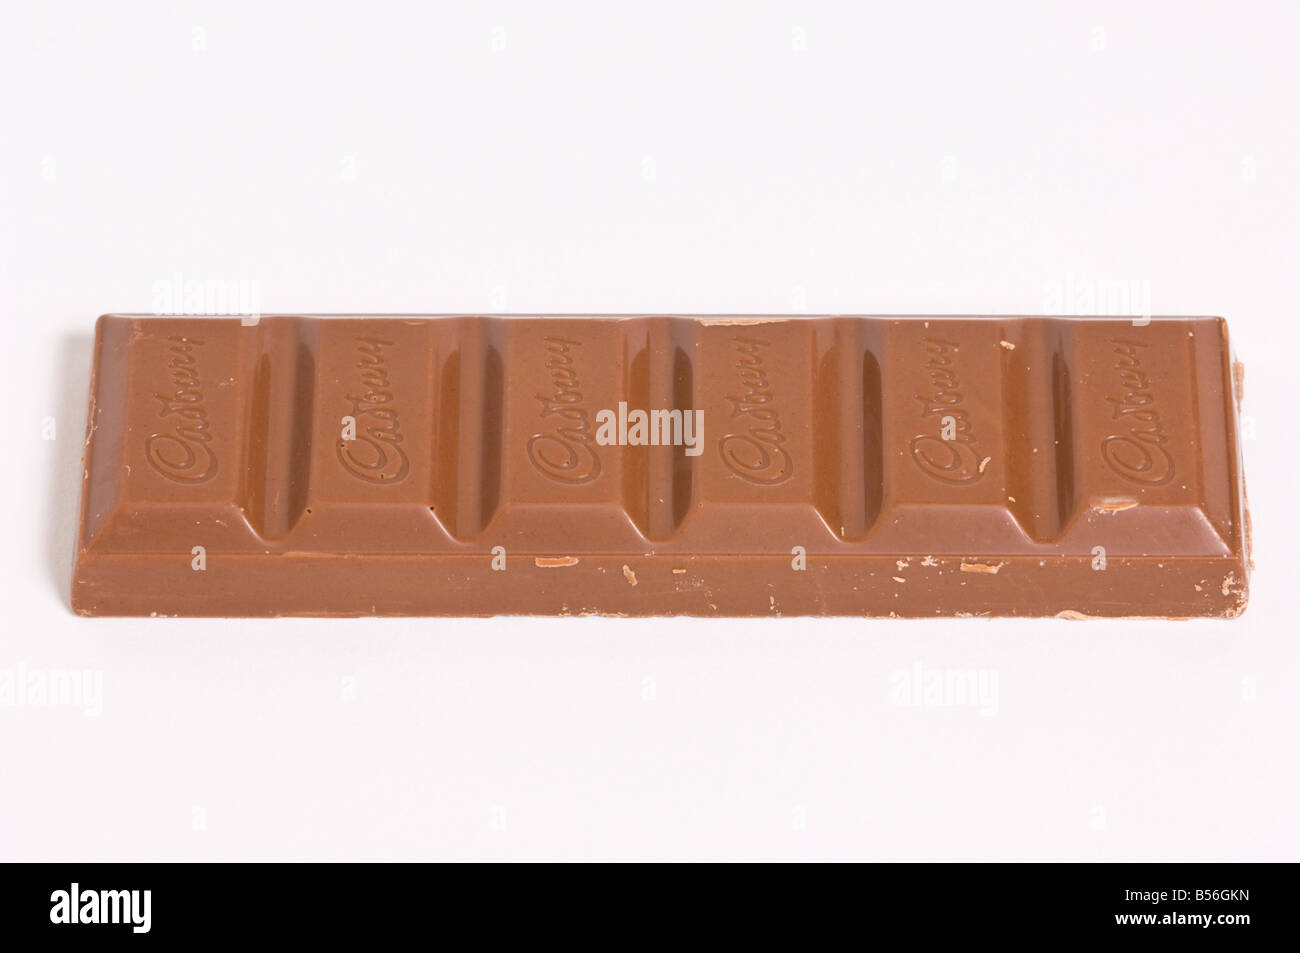 cadbury chocolate bar